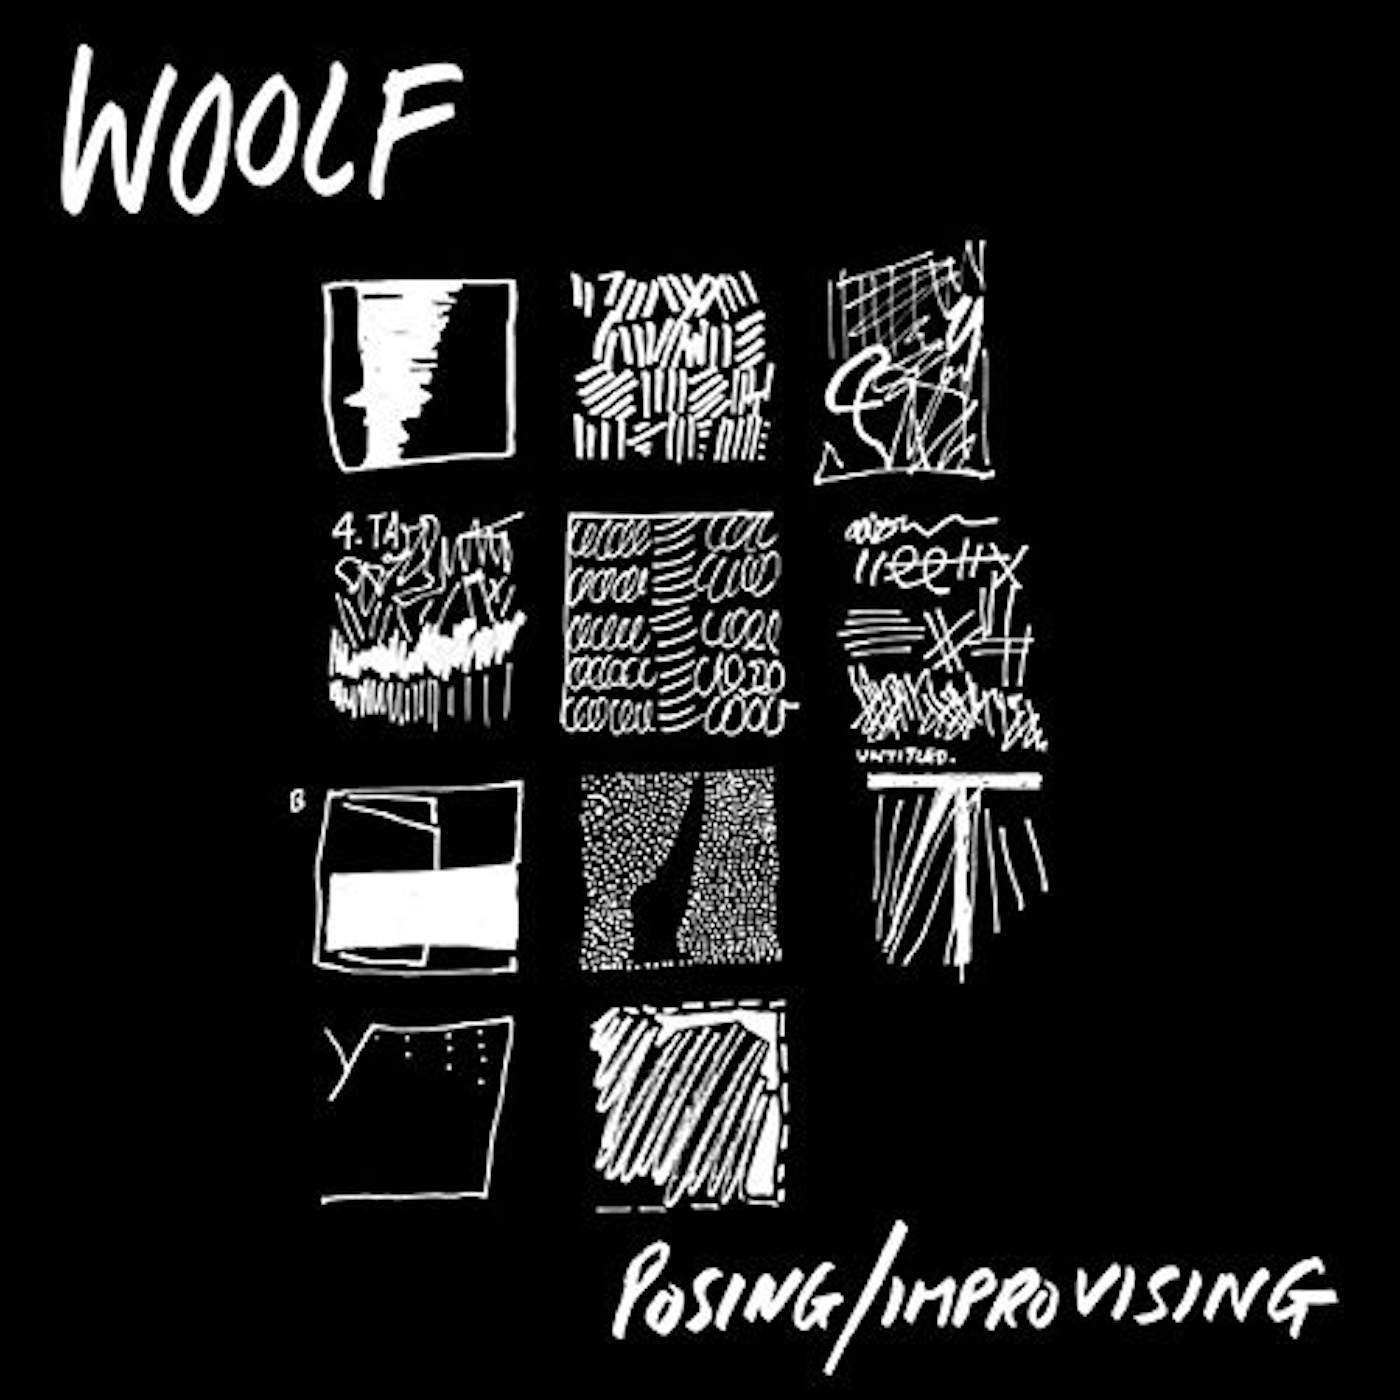 Woolf POSING / IMPROVISING Vinyl Record